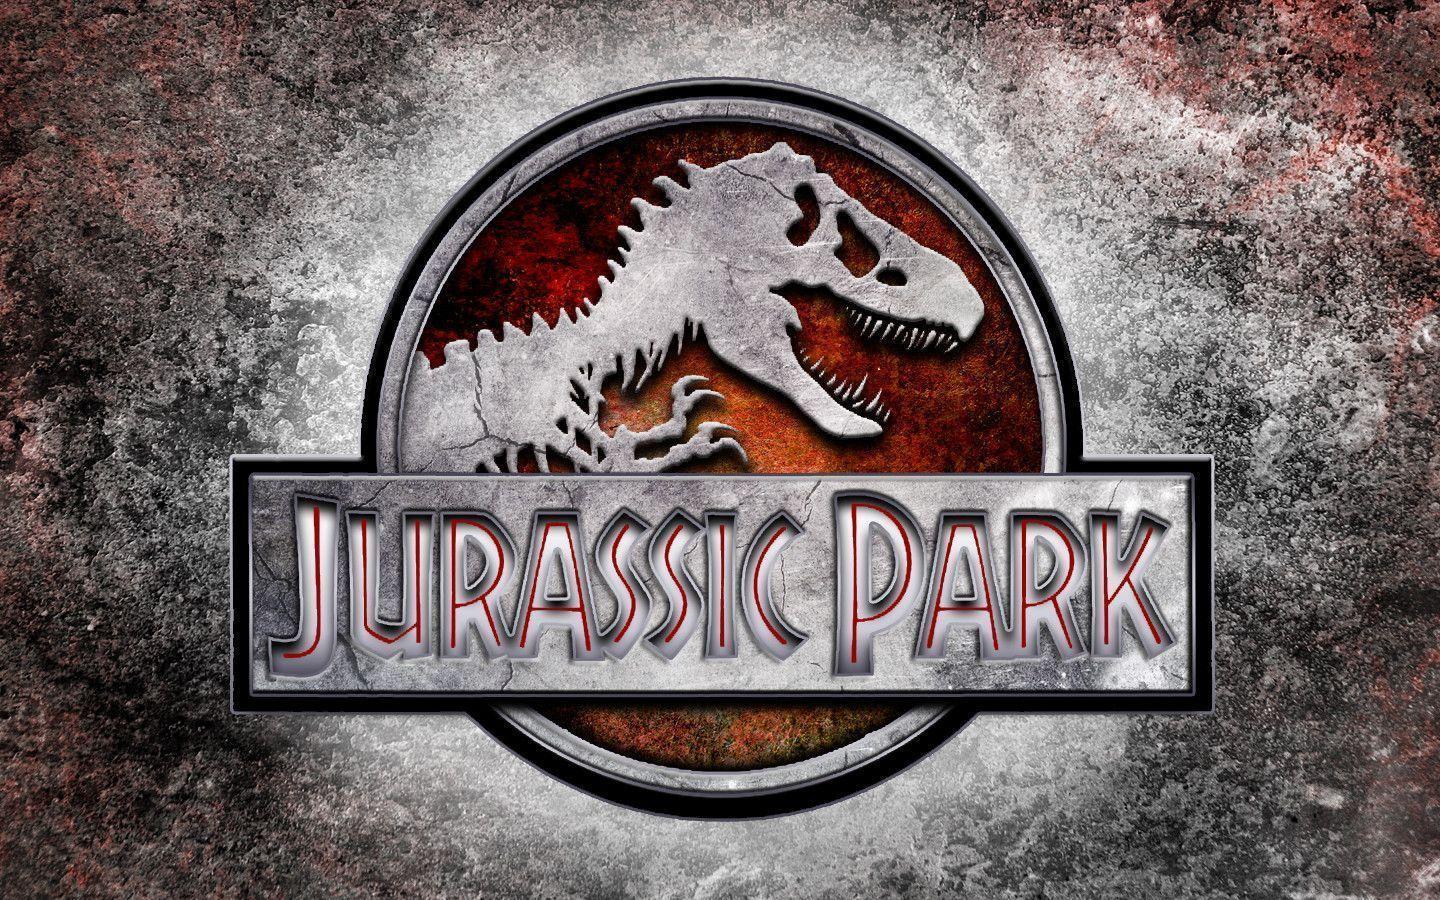 Jurassic Park Desktop Wallpaper Image & Picture